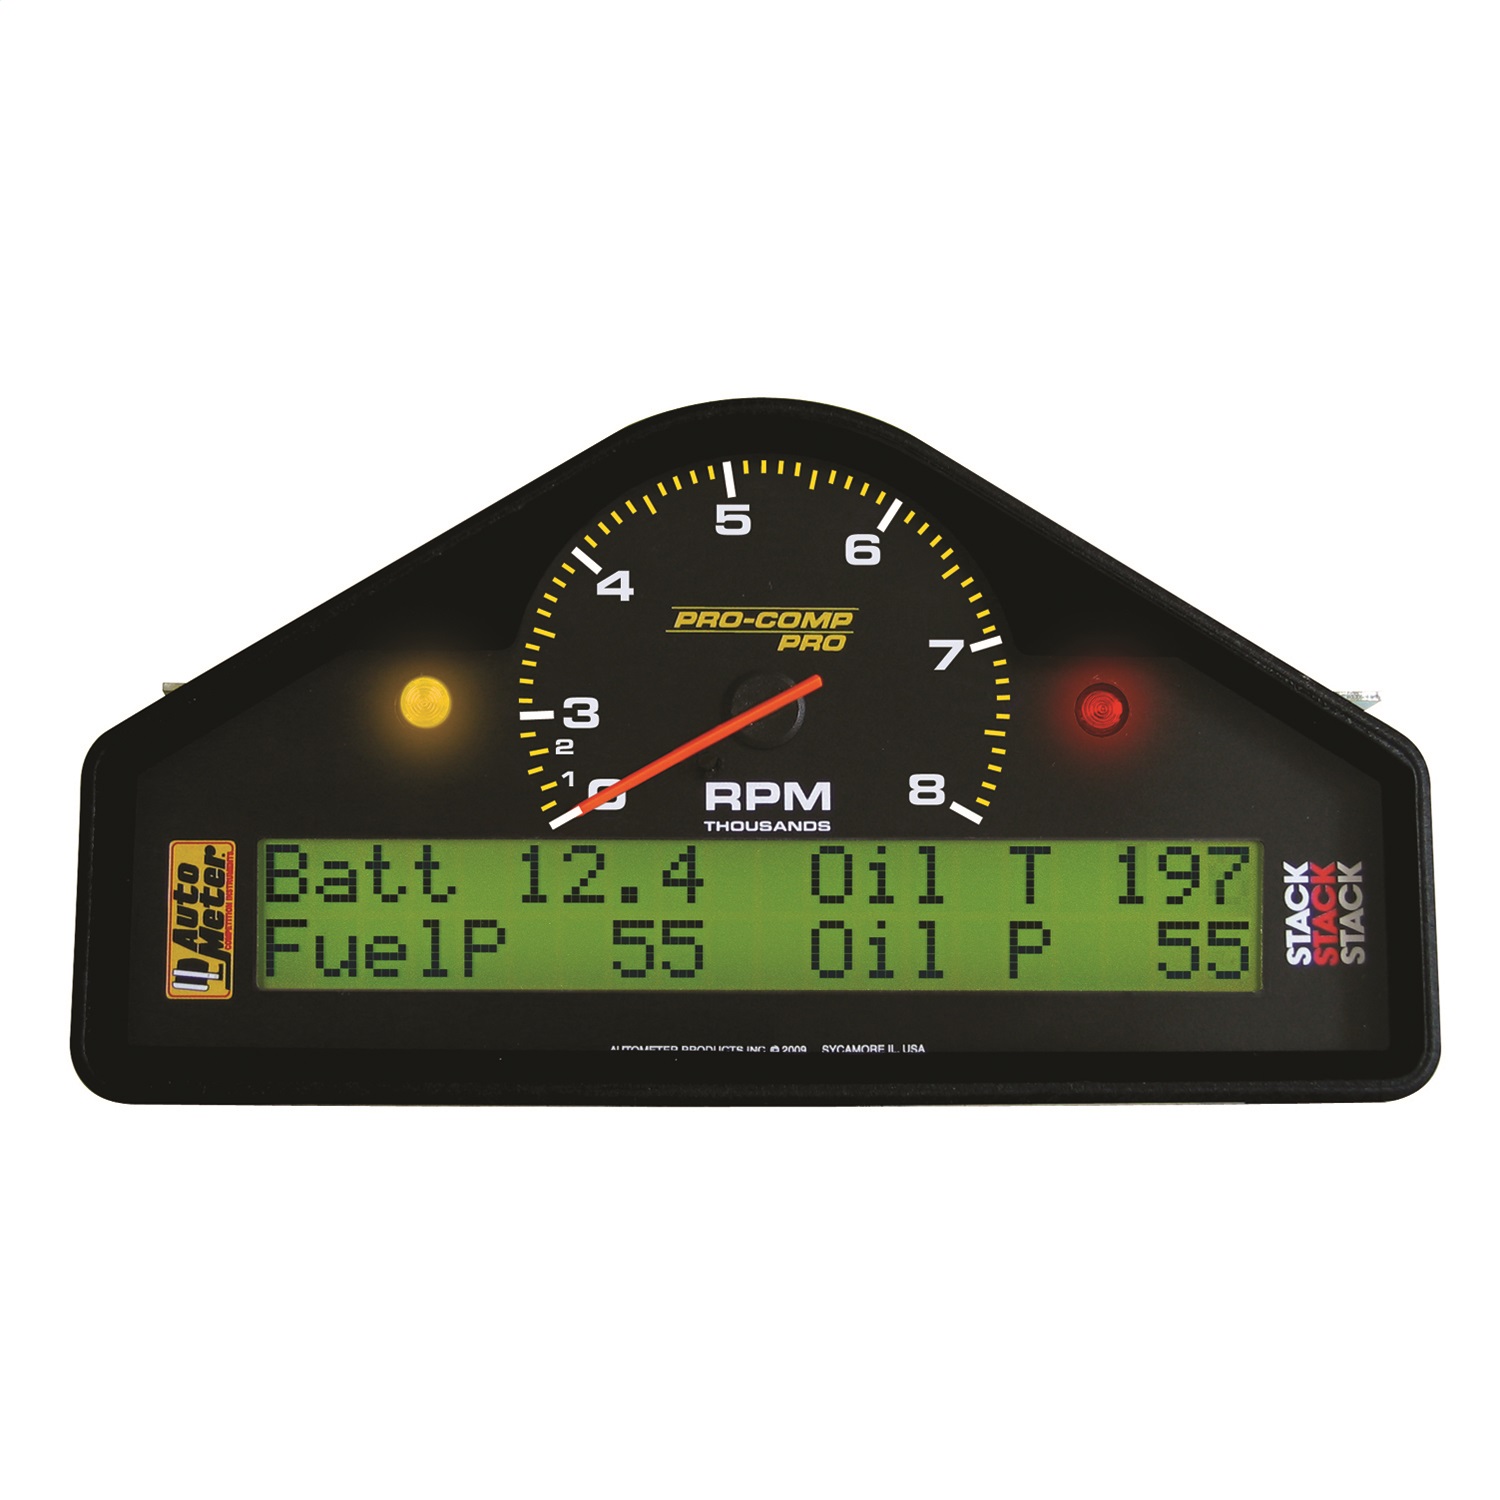 Auto Meter Auto Meter 6012 Pro-Comp Pro; Digital Race Tach/Speedo Combo